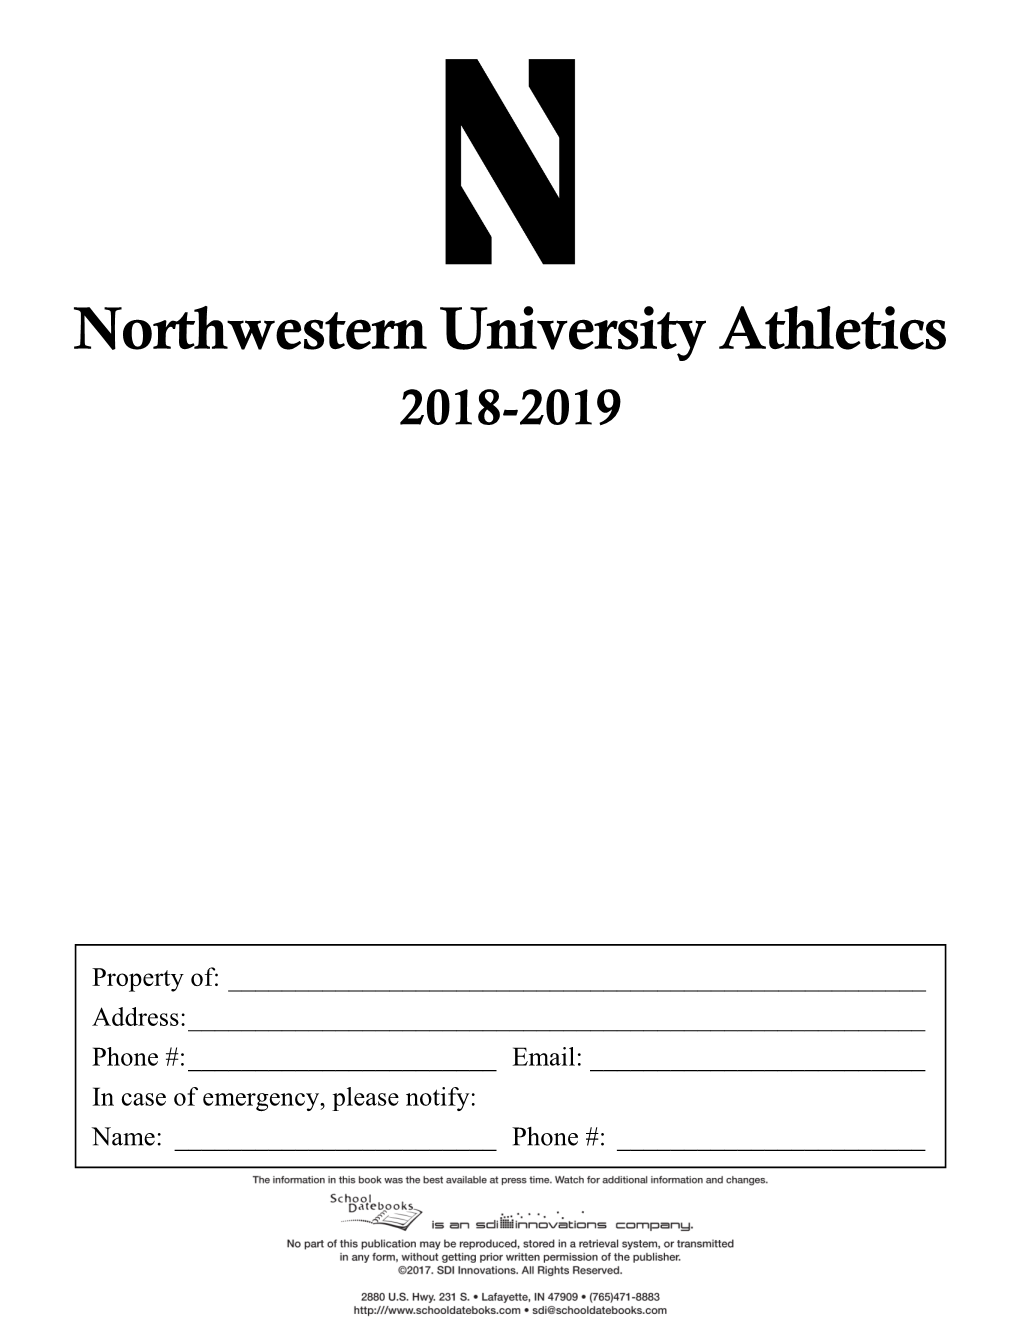 Northwestern University Athletics 2018-2019